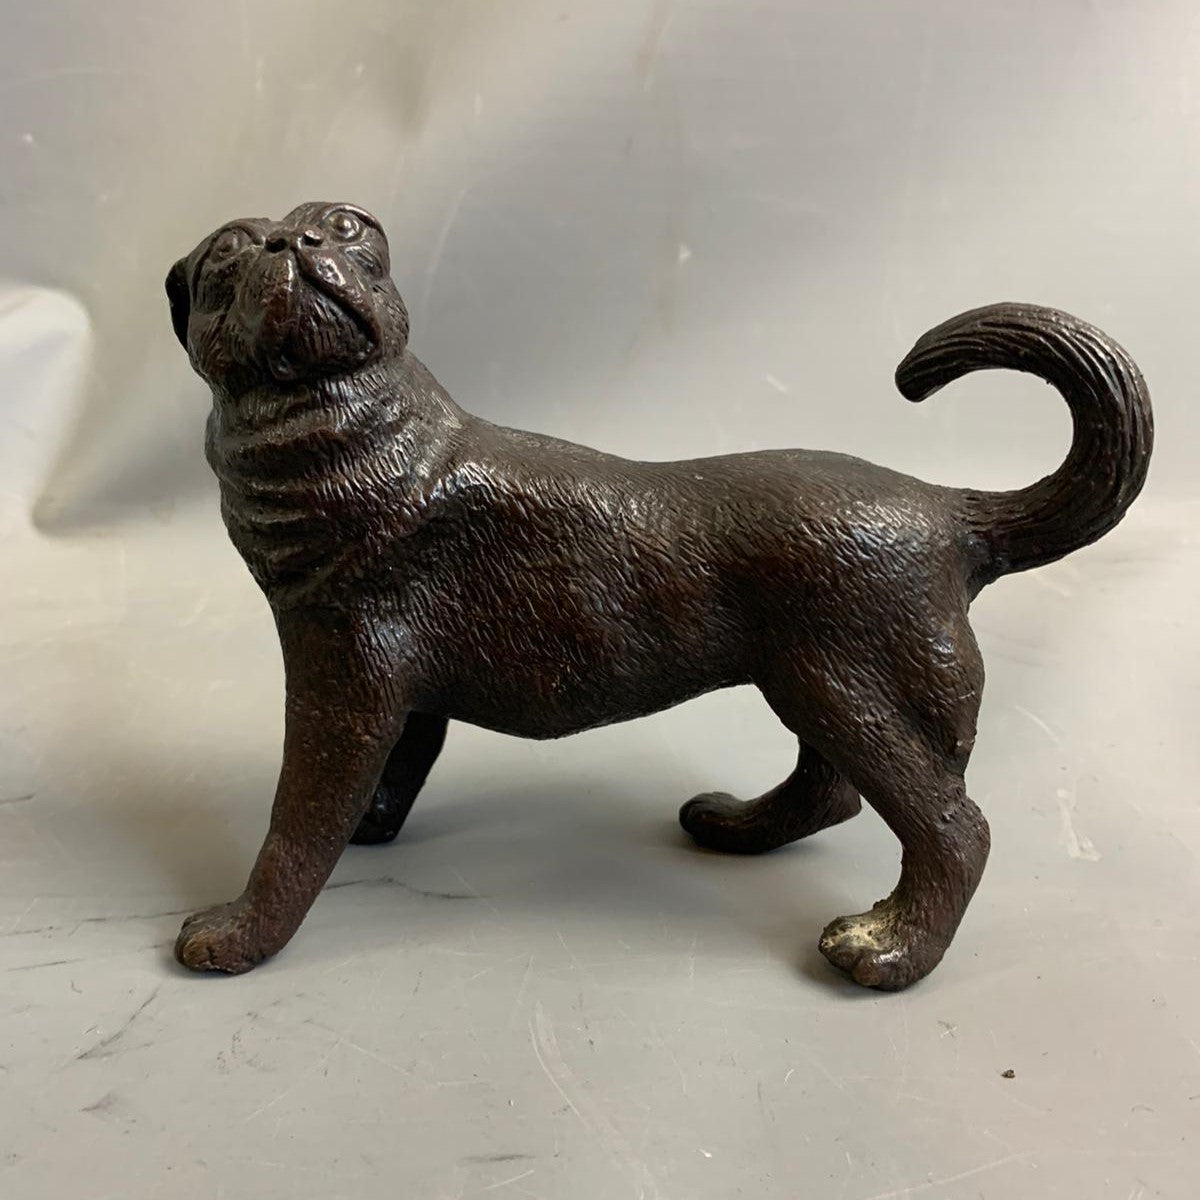 Black Bronze Pug Figurine Dog Vintage c1980